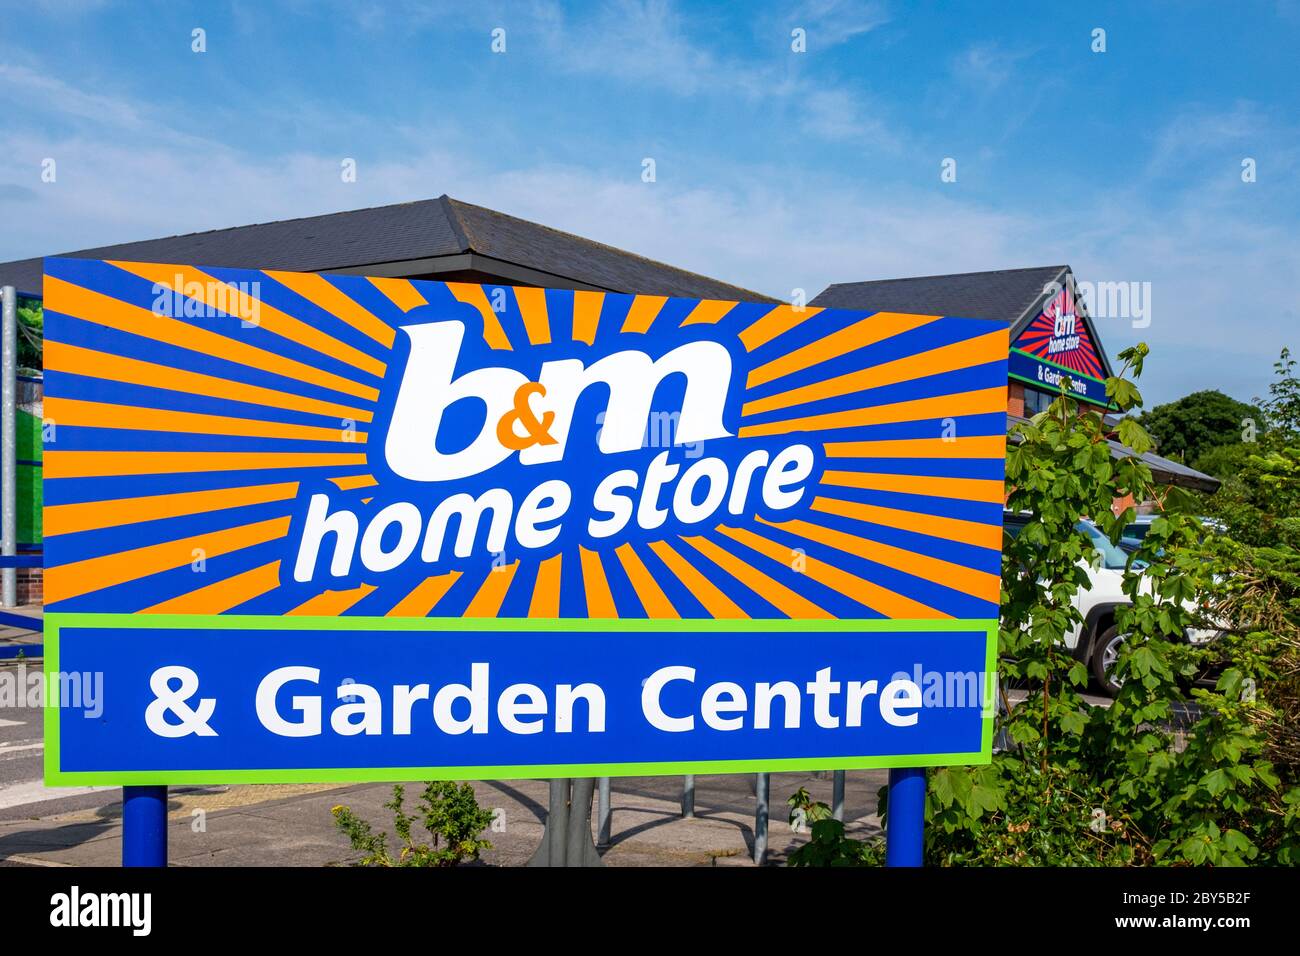 B&M home store & Garden Centre sign Stock Photo